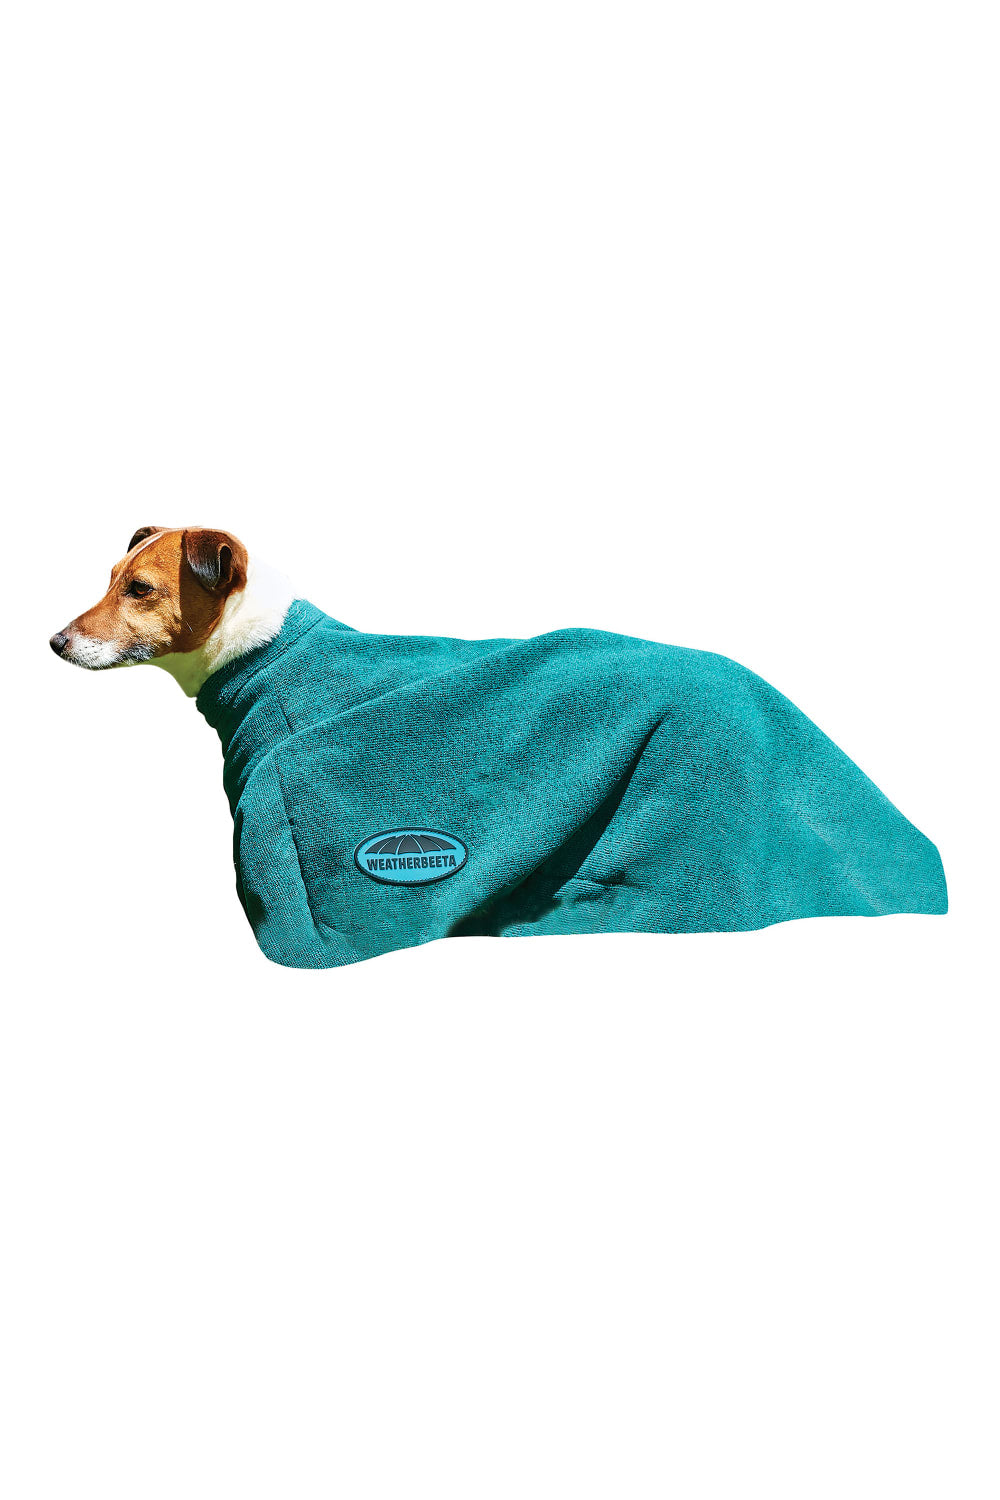 Weatherbeeta Dry-dog Bag (Hunter Green) (XS)